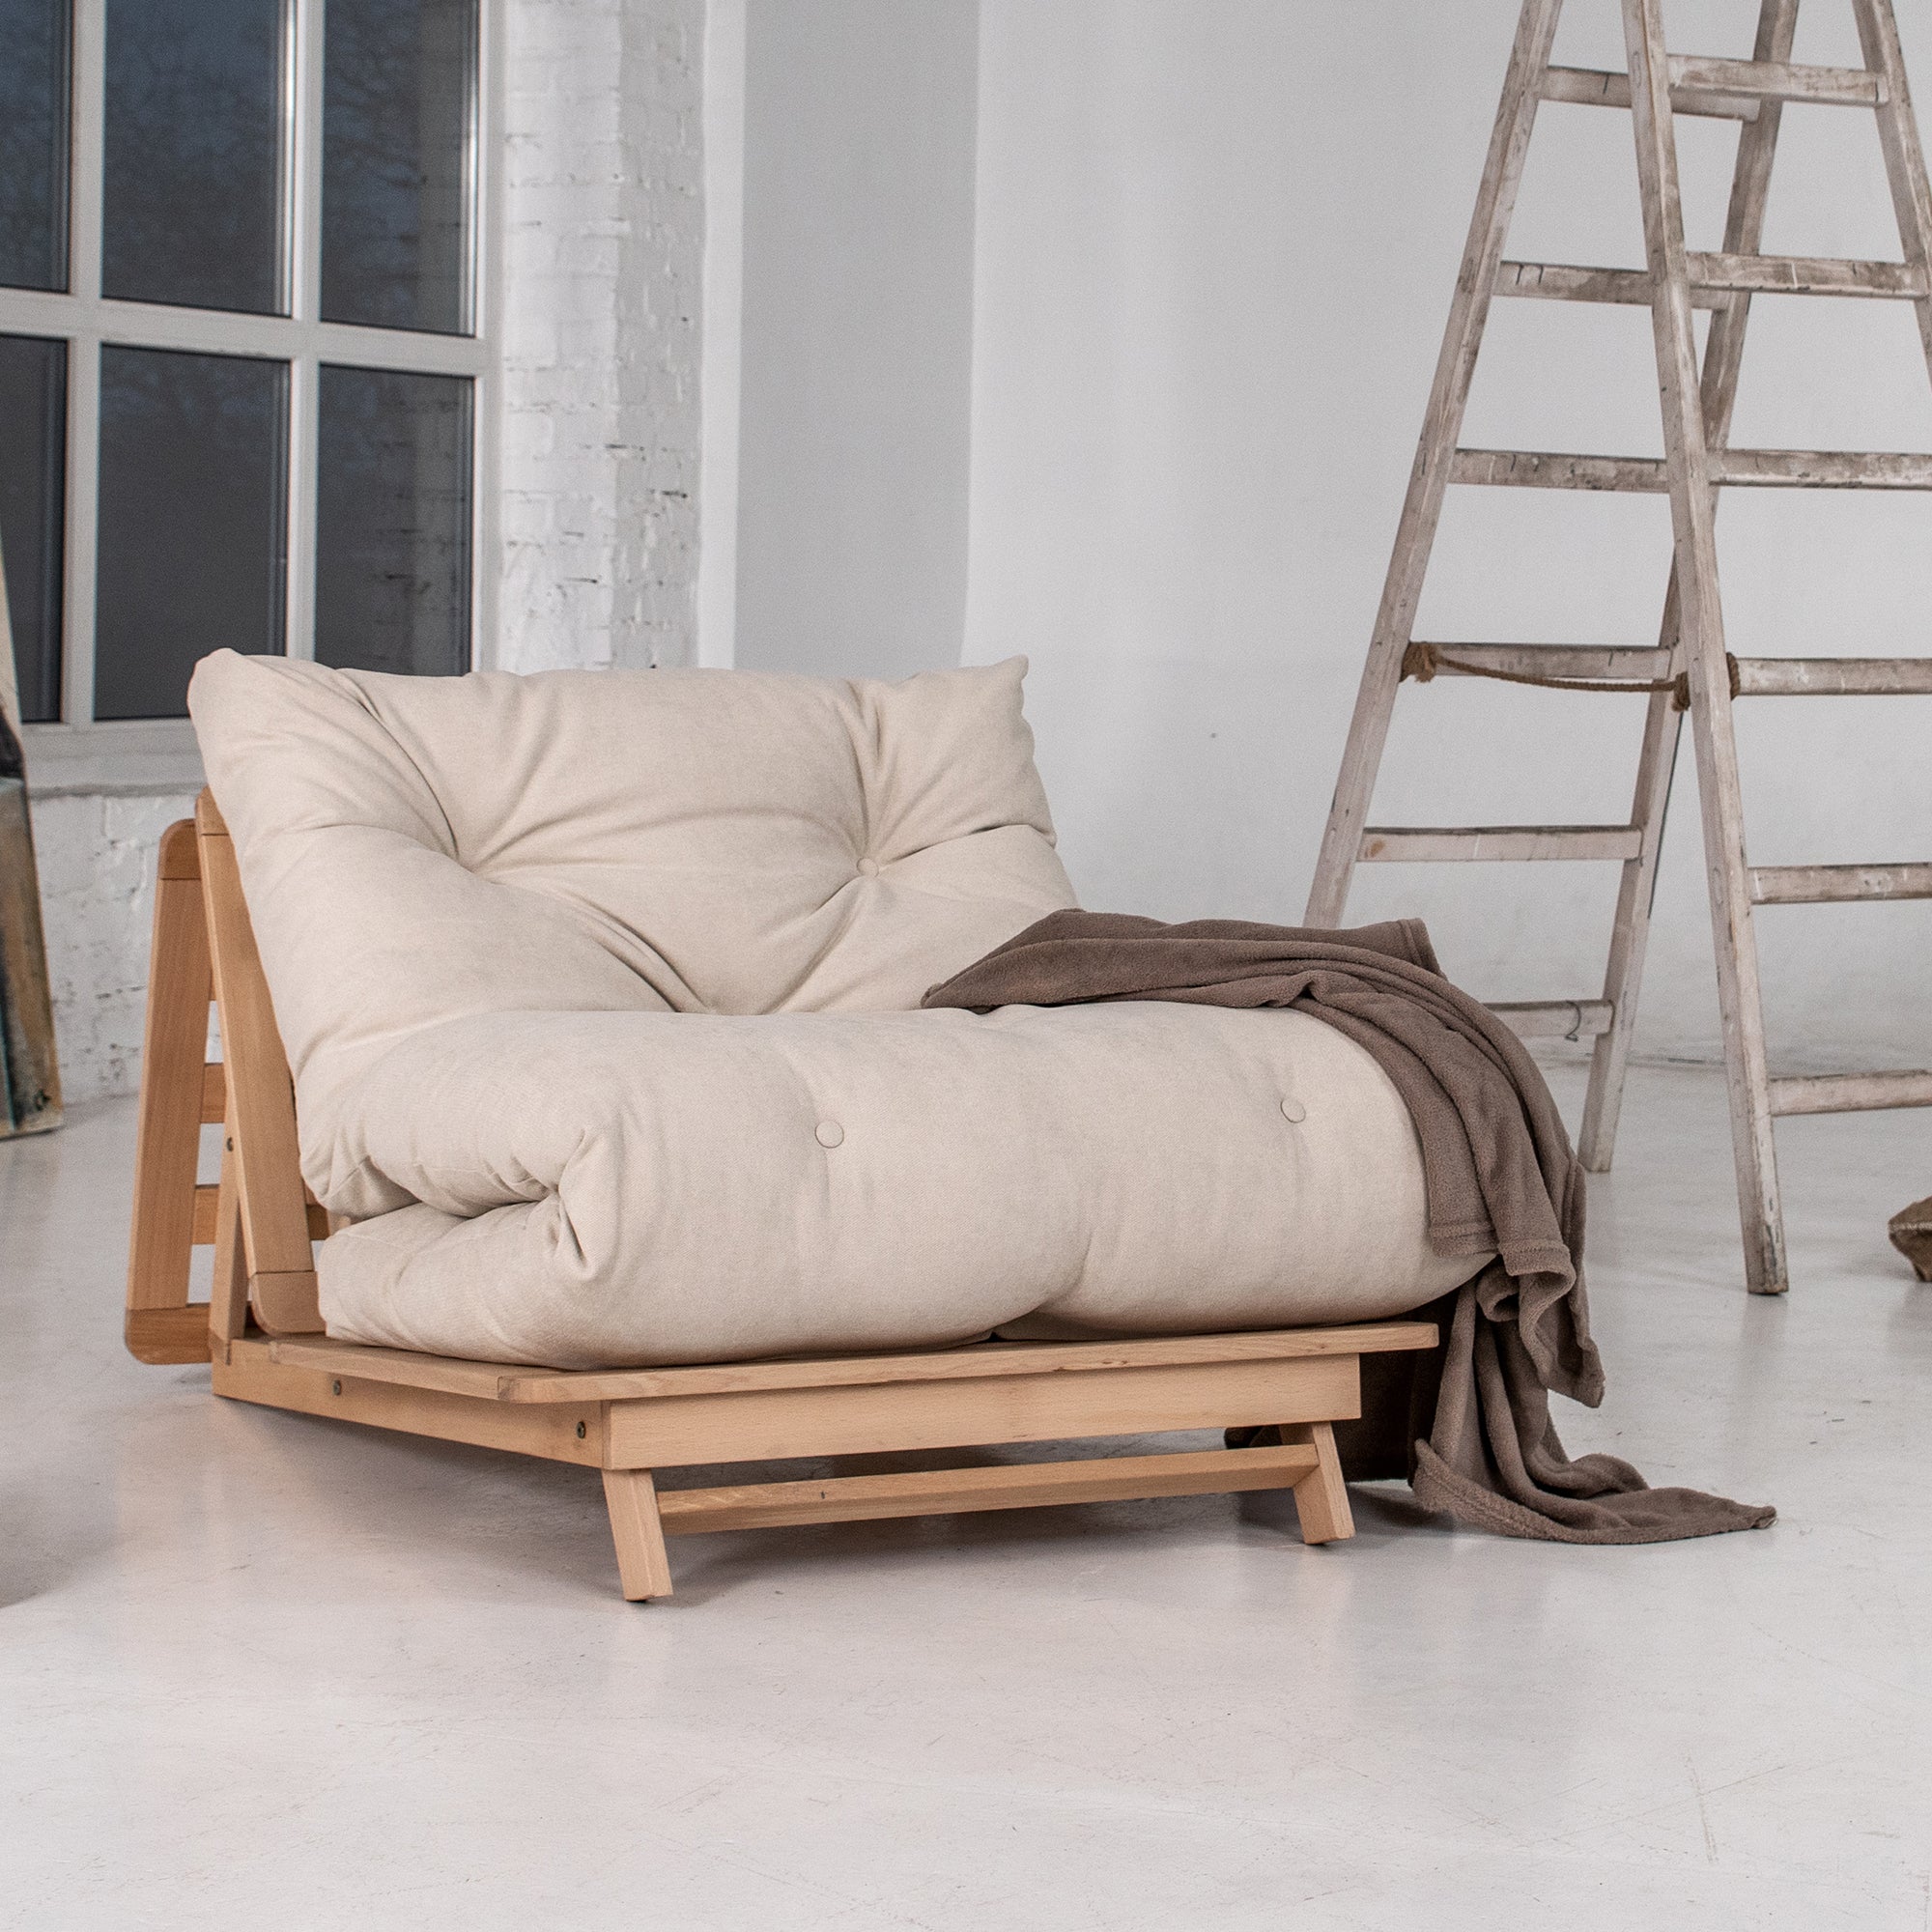 LAYTI-90 Futon Chair, Beech Wood Frame, Natural Colour-creamy fabric-interior view